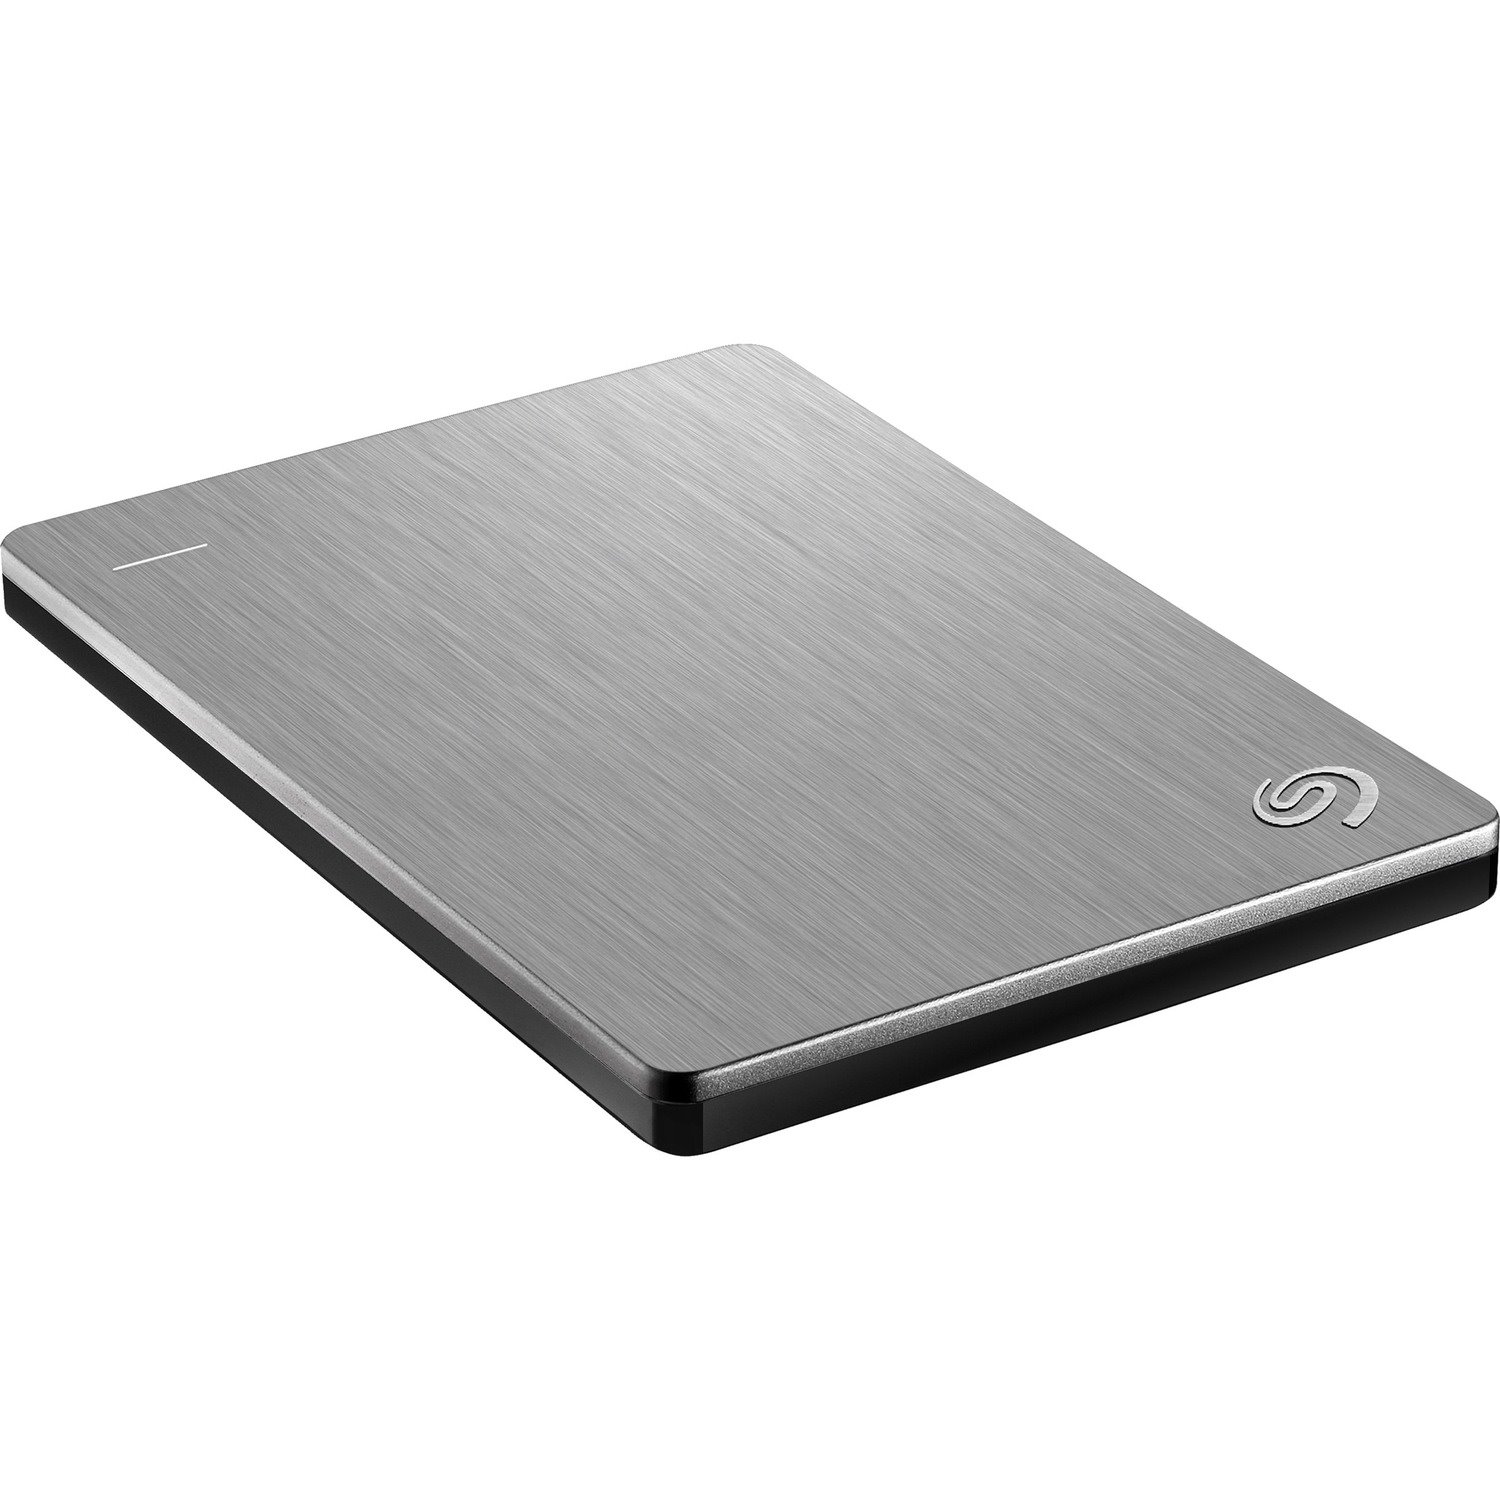 Seagate Backup Plus Slim STDR2000301 2 TB Portable Hard Drive - 2.5" External - Silver